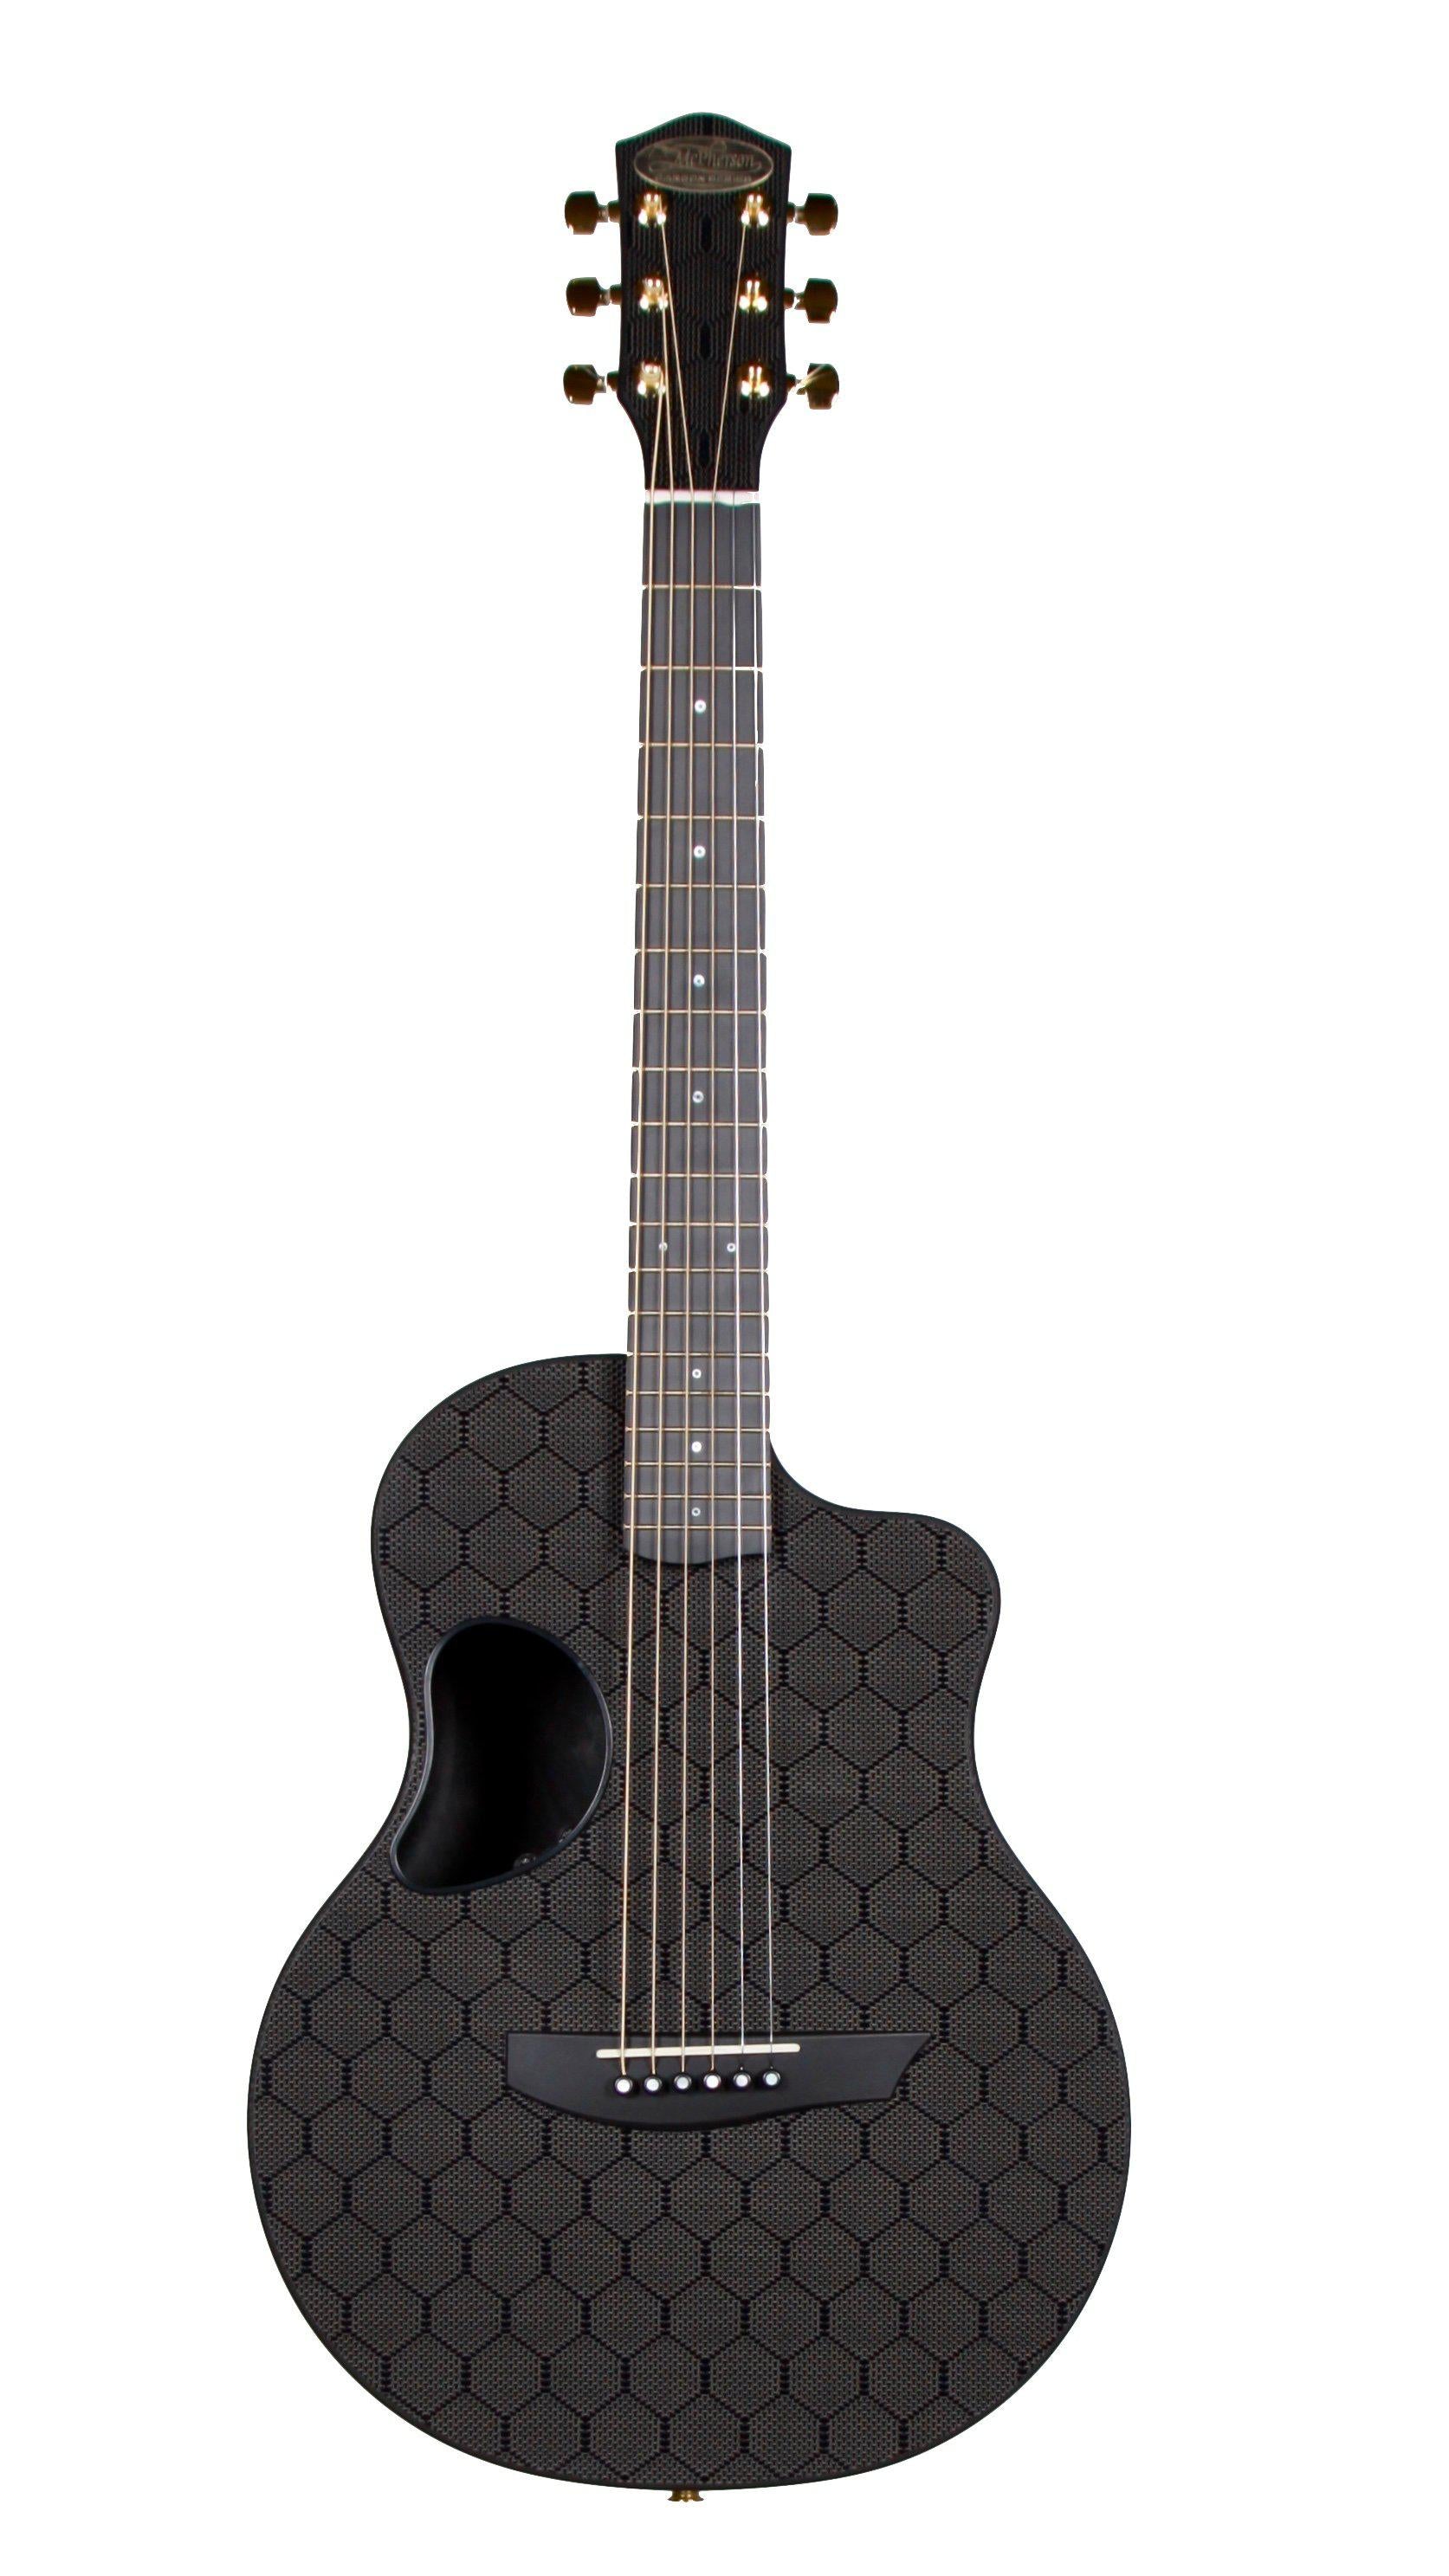 McPherson Carbon Fiber Touring Model Honeycomb Finish and Gold Hardware #GCTH917B - McPherson Guitars - Heartbreaker Guitars